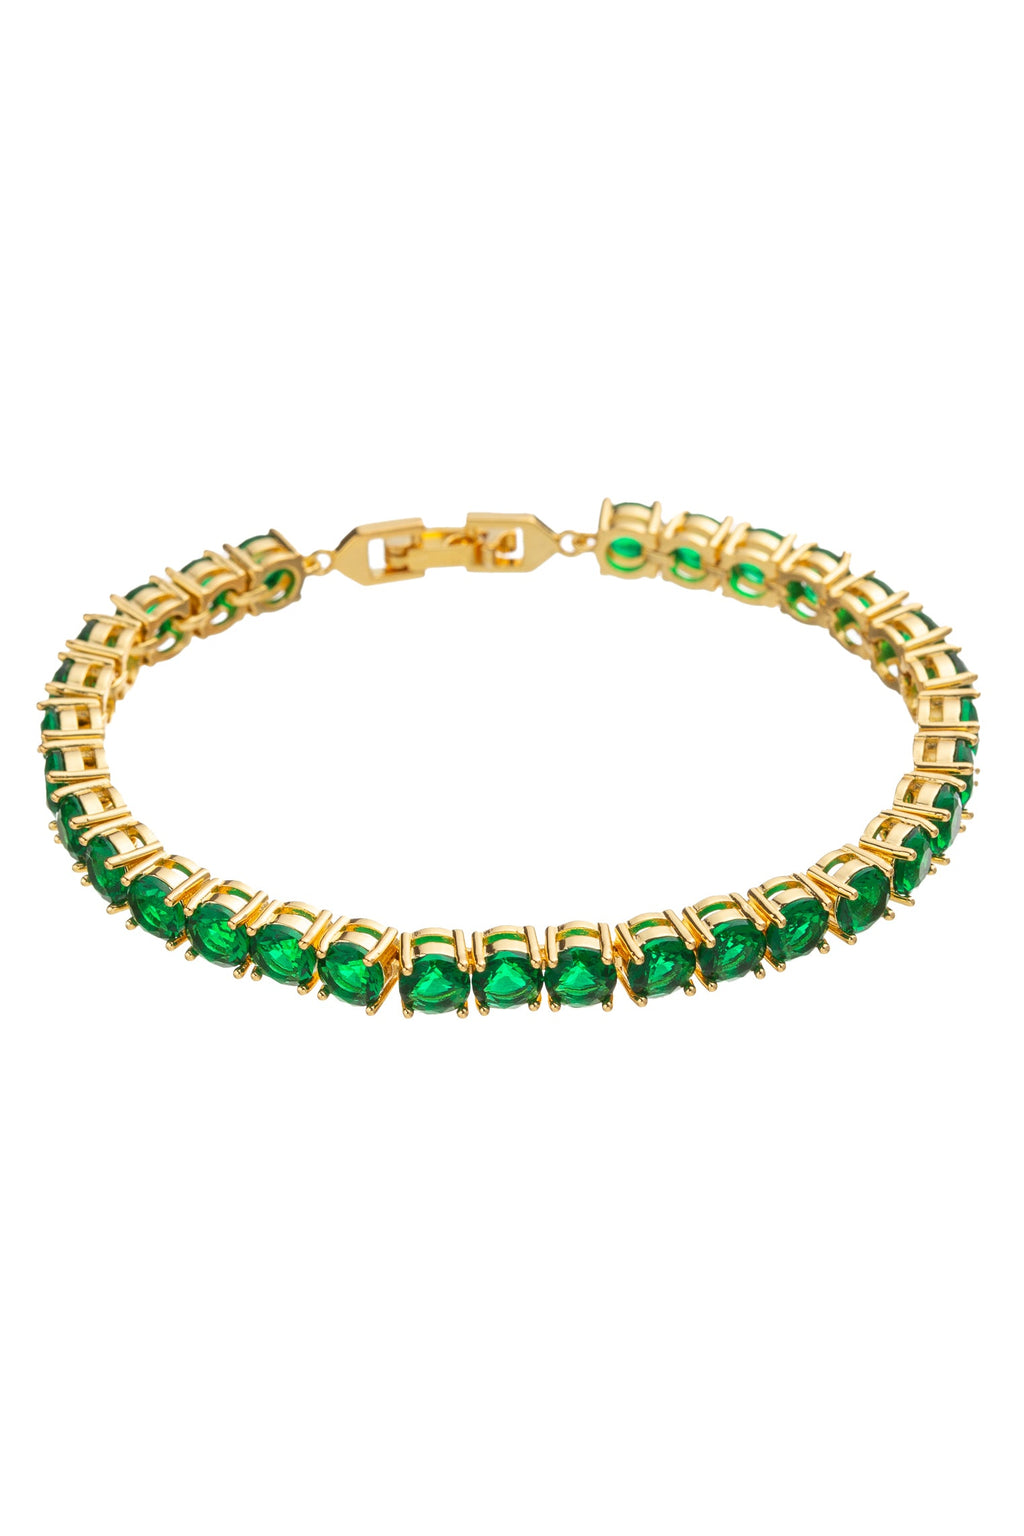 Harper Green Cubic Zirconia Tennis Bracelet: Nature's Radiant Charm on Your Wrist.